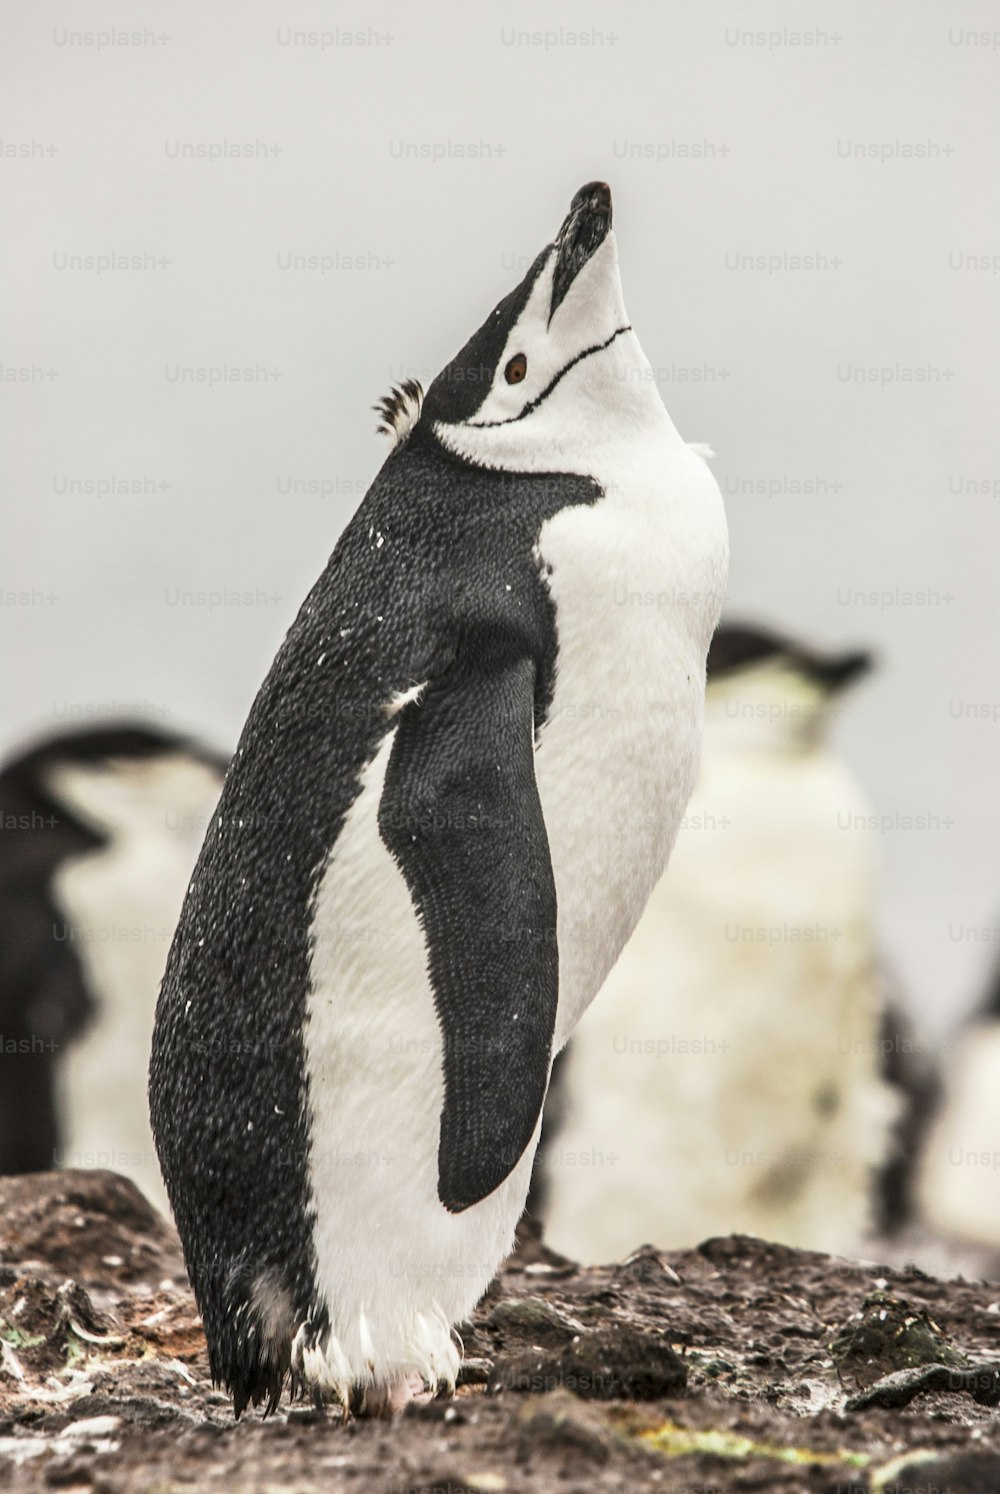 Um pinguim Chinstrap na Antártida,